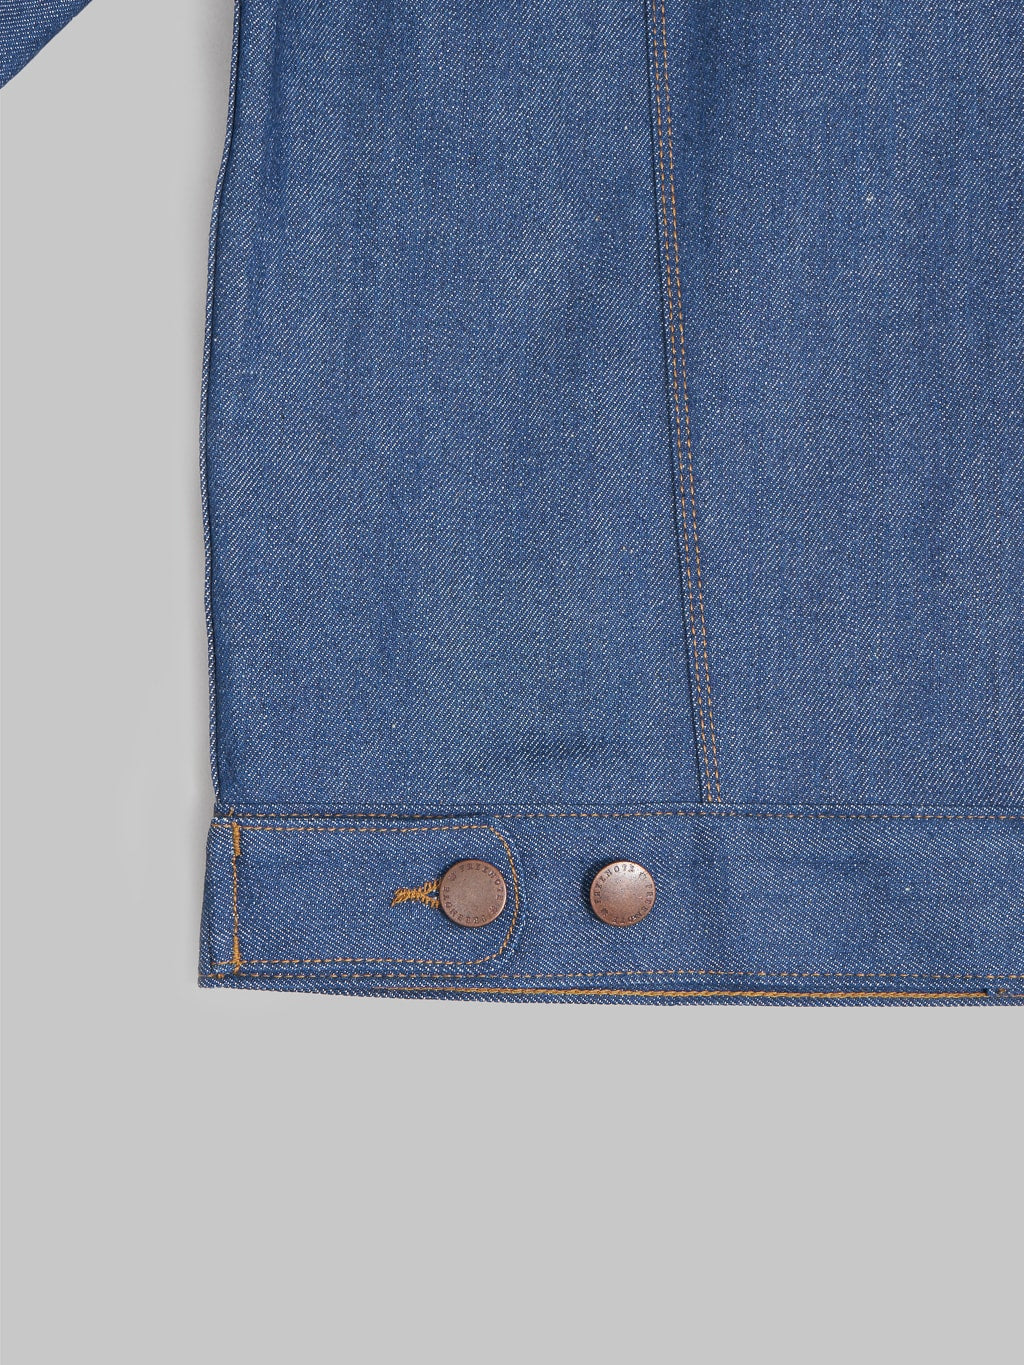 freenote cloth classic denim jacket vintage blue denim adjustable tab